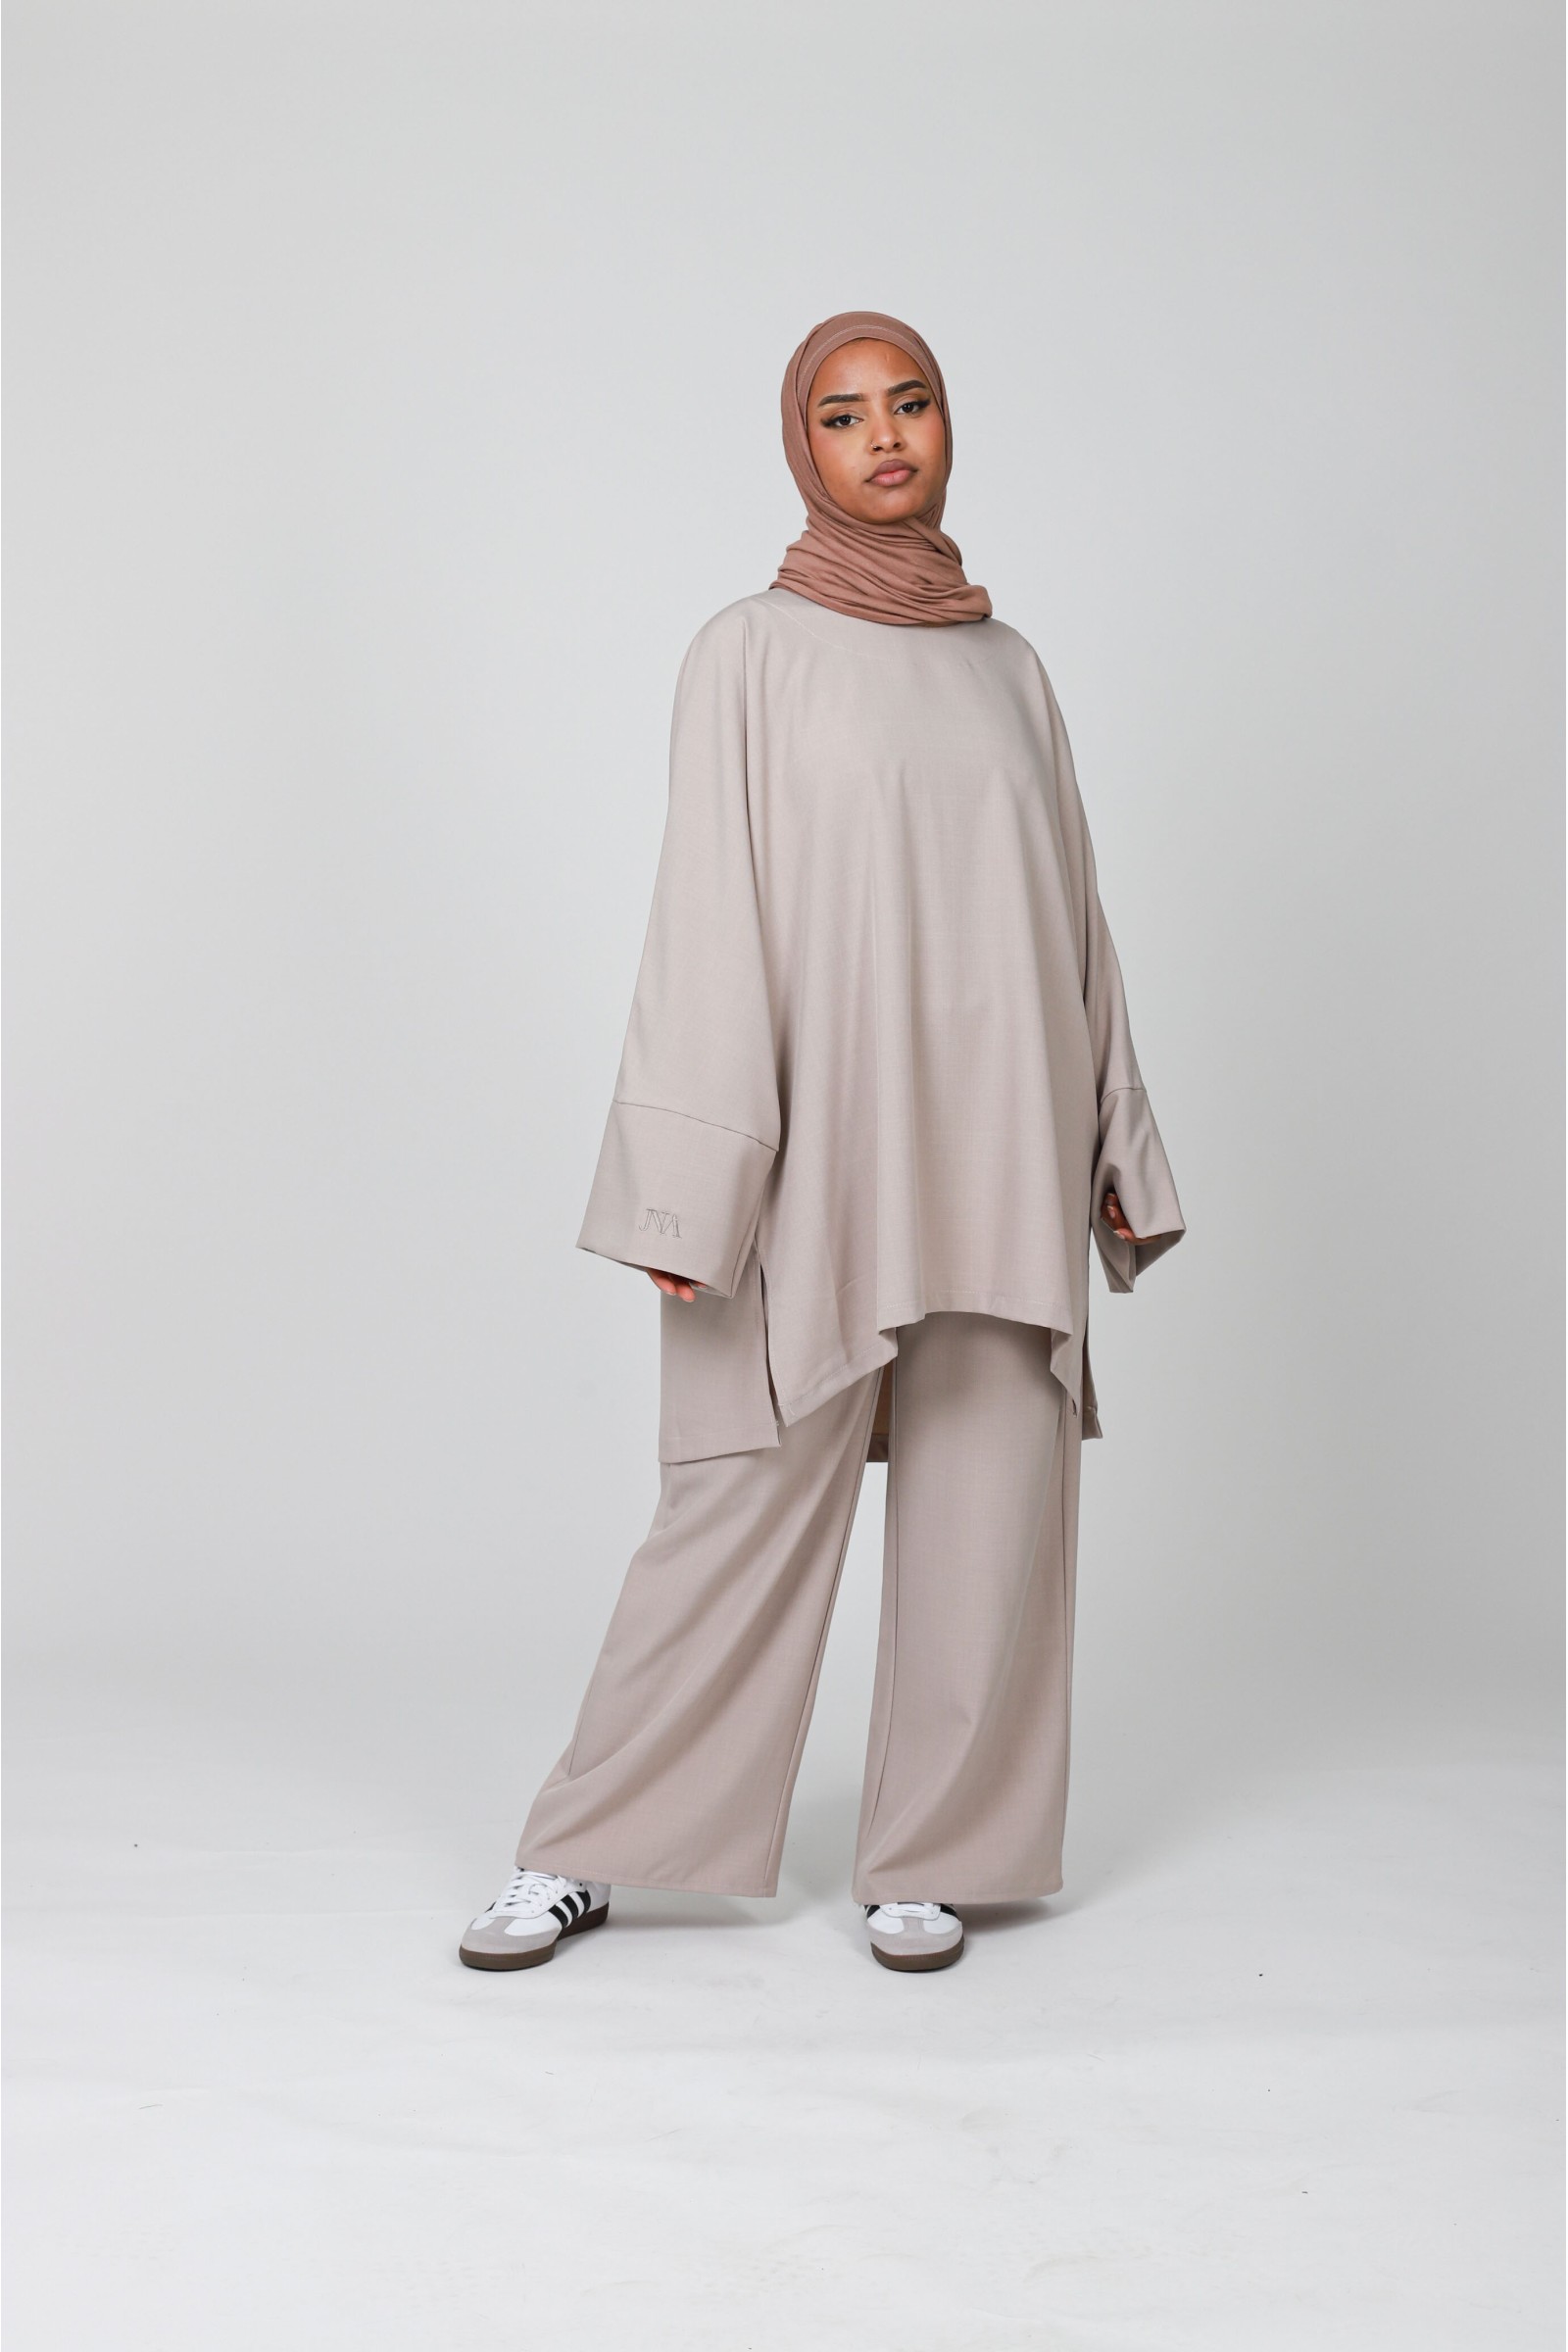 Legislated pants set for Muslim women 2024